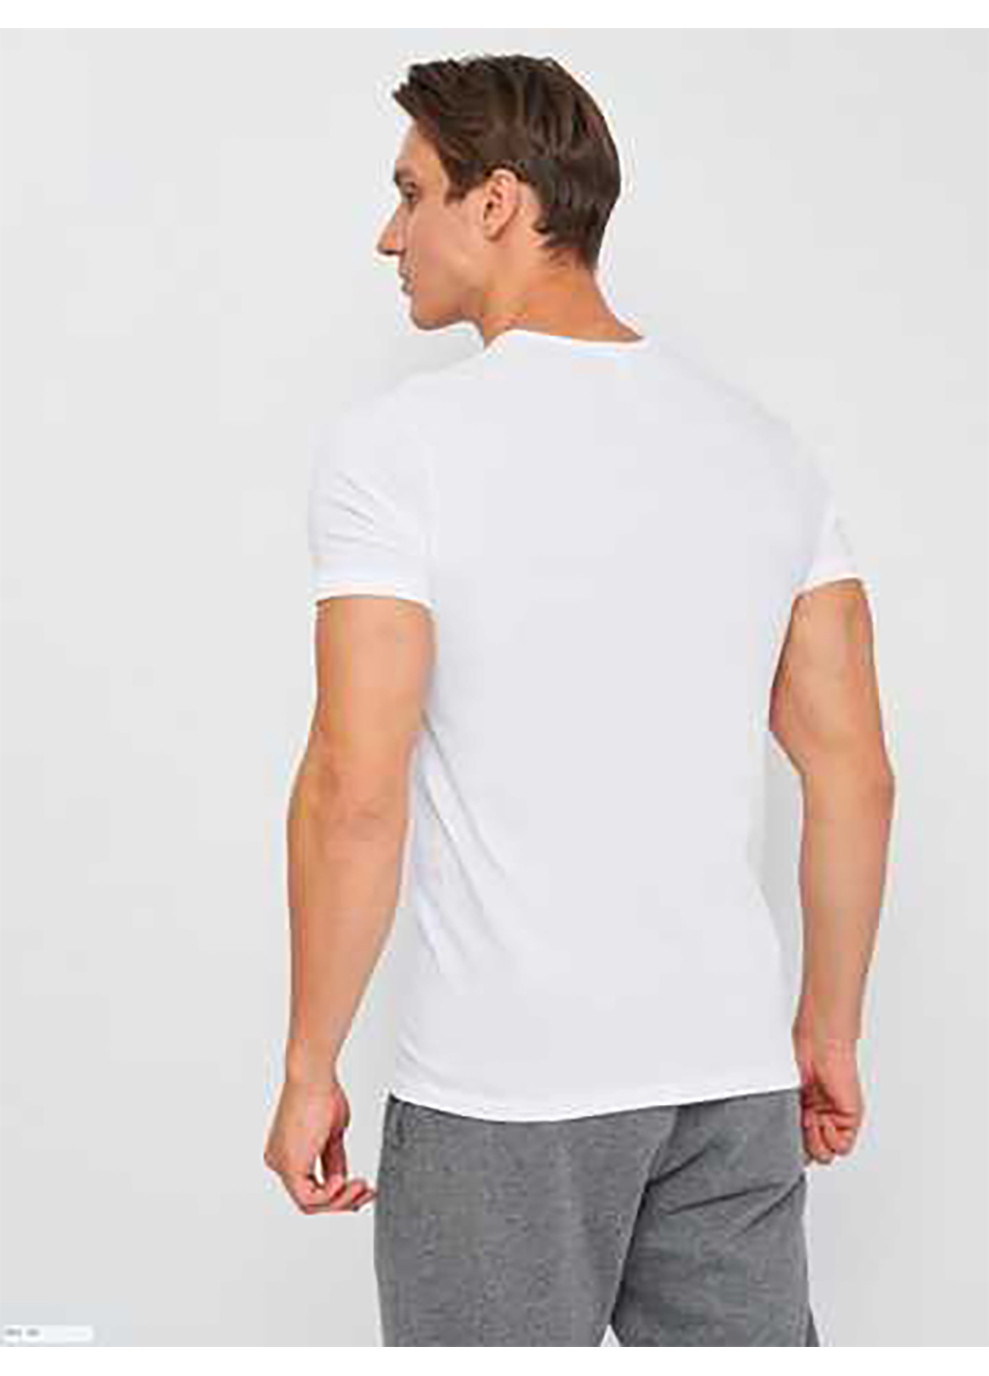 Біла футболка t-shirt mezza manica girocollo stampa logo petto білий m чоловік k1335 bianco-m Kappa